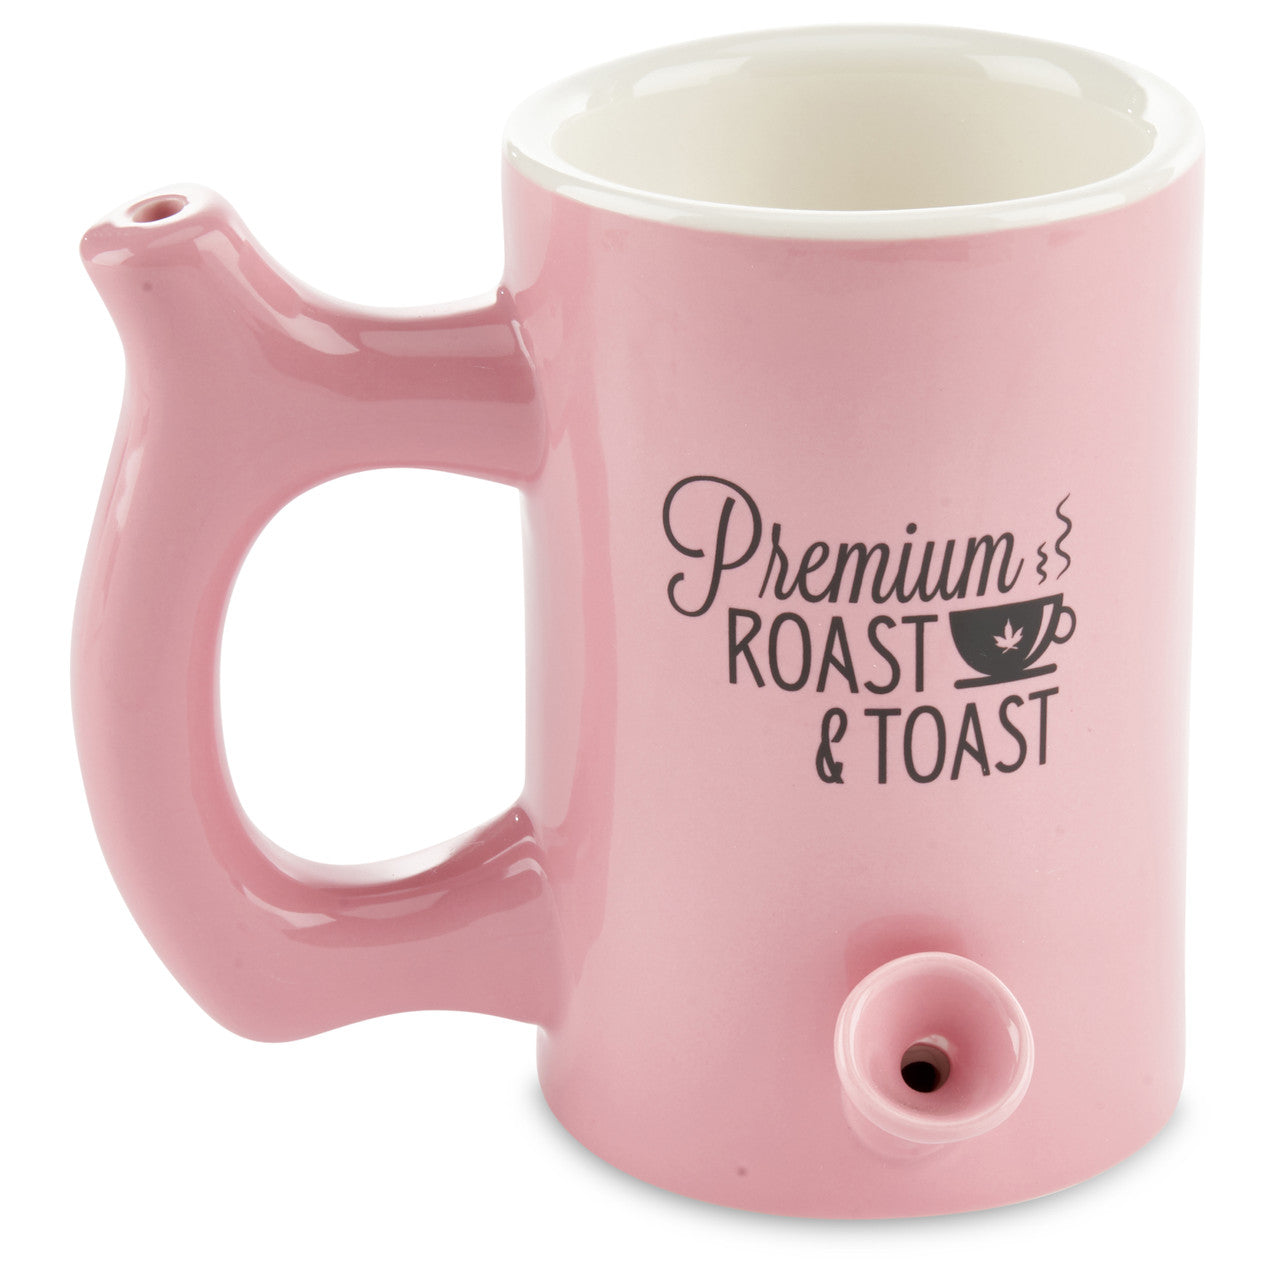 Premium Roast & Toast - Ceramic Mug Pipe - Glass